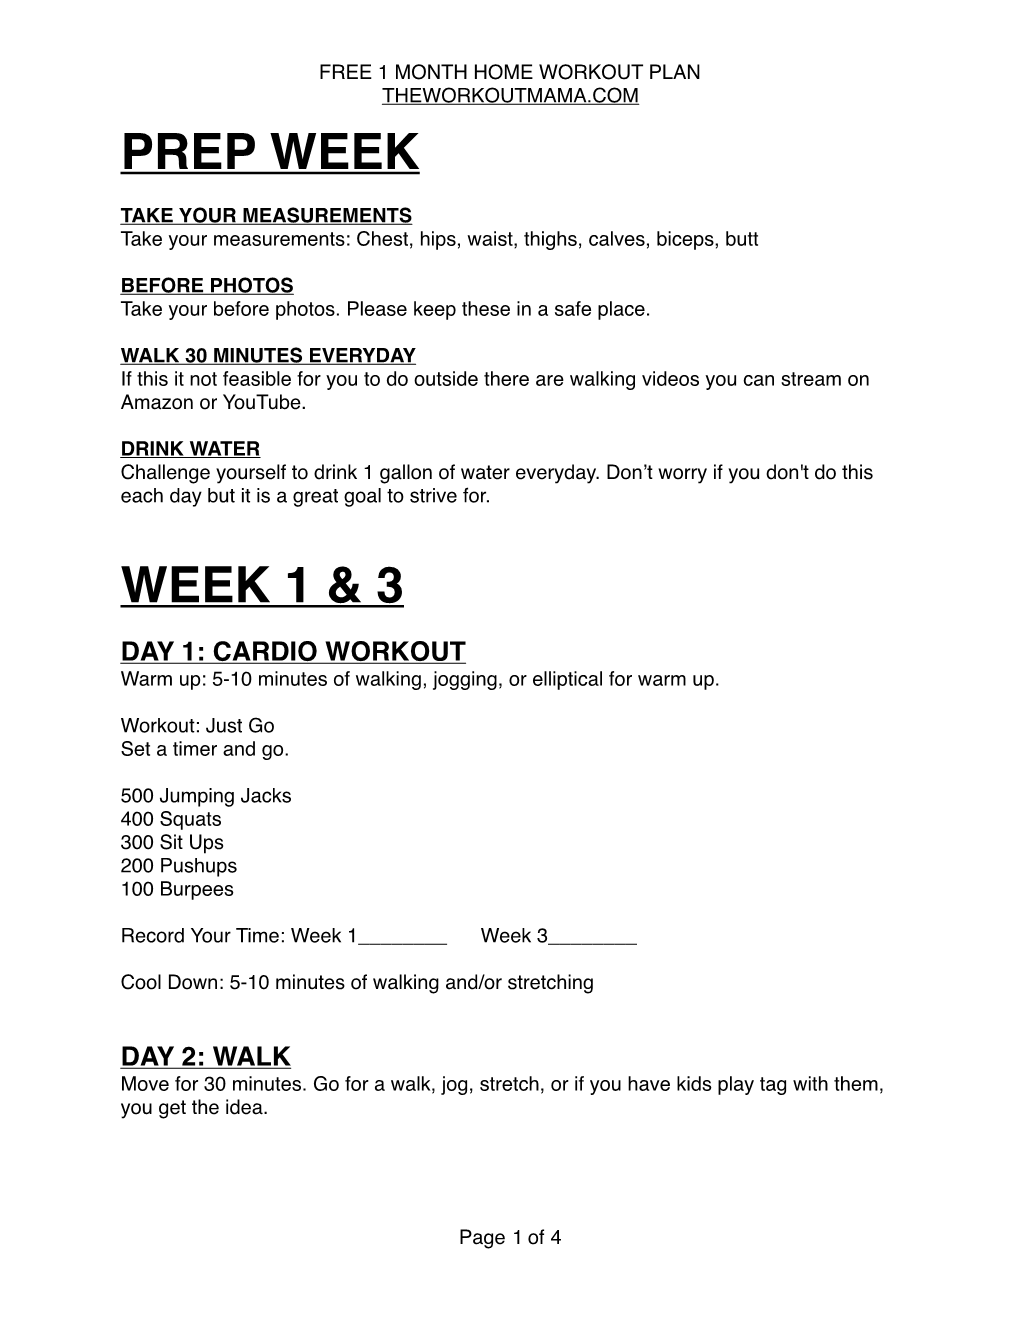 Free 1 Month Home Workout Plan Theworkoutmama.Com Prep Week